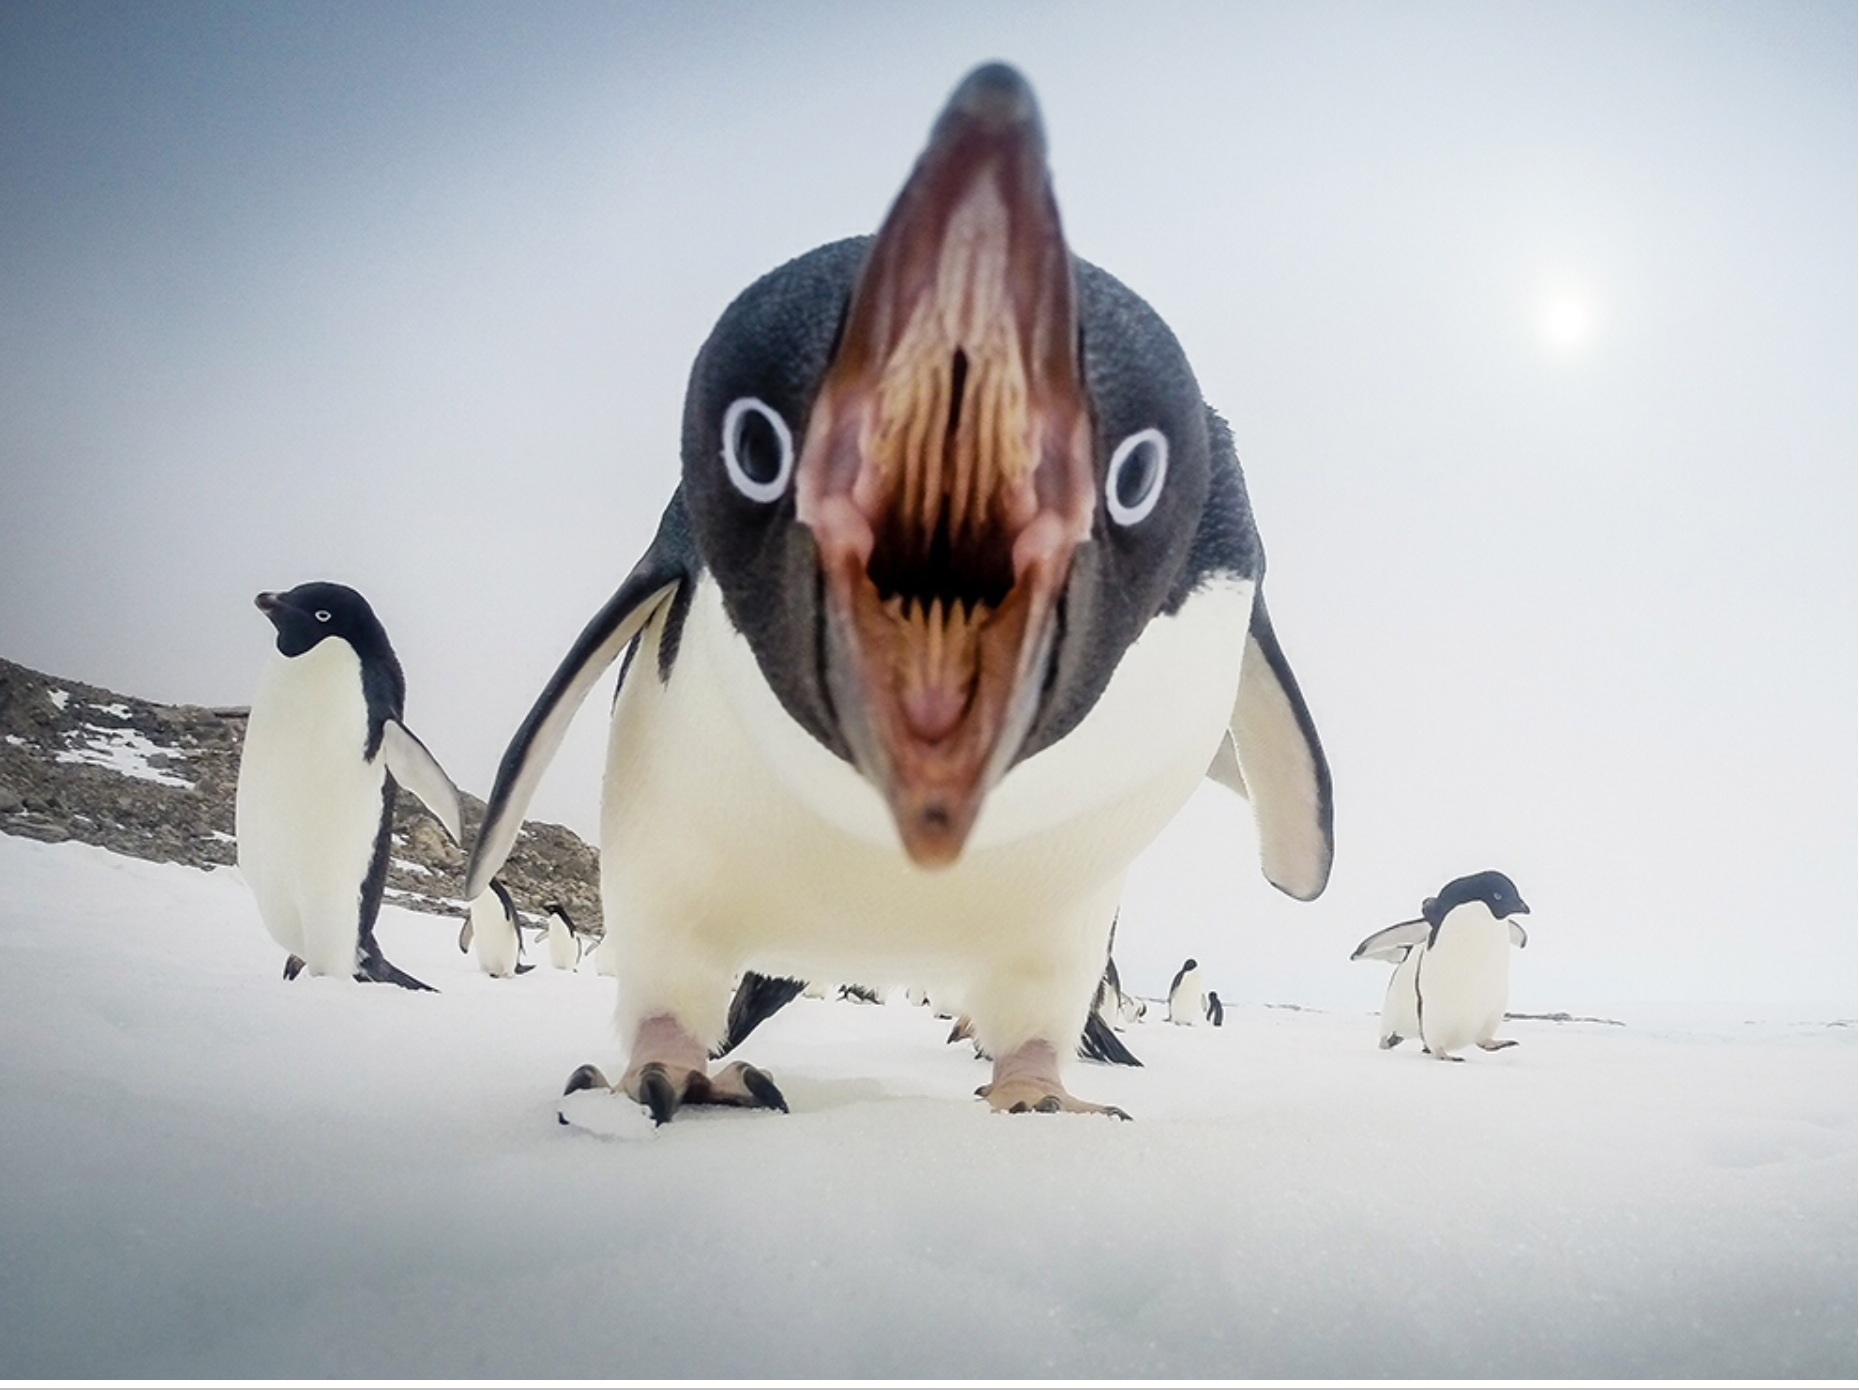 Pingvinens nebb